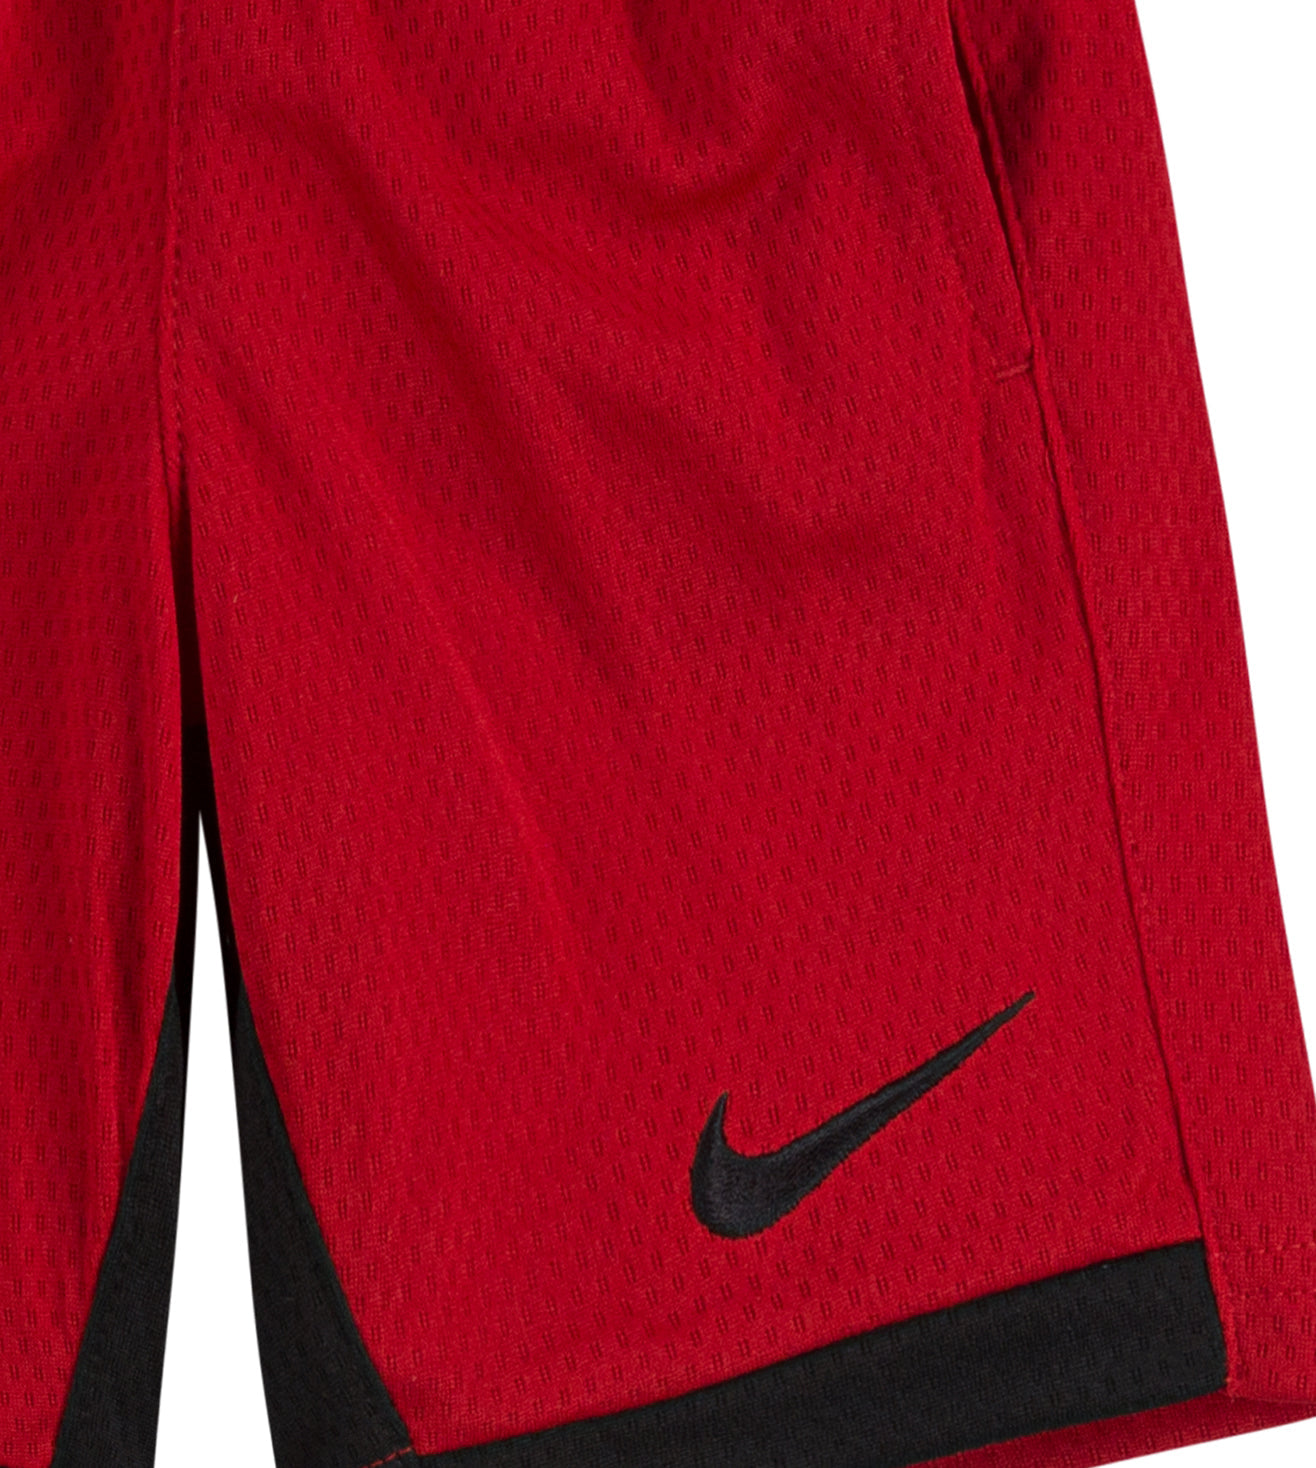 Nike Dri-FIT Trophy Shorts Shorts Nike   